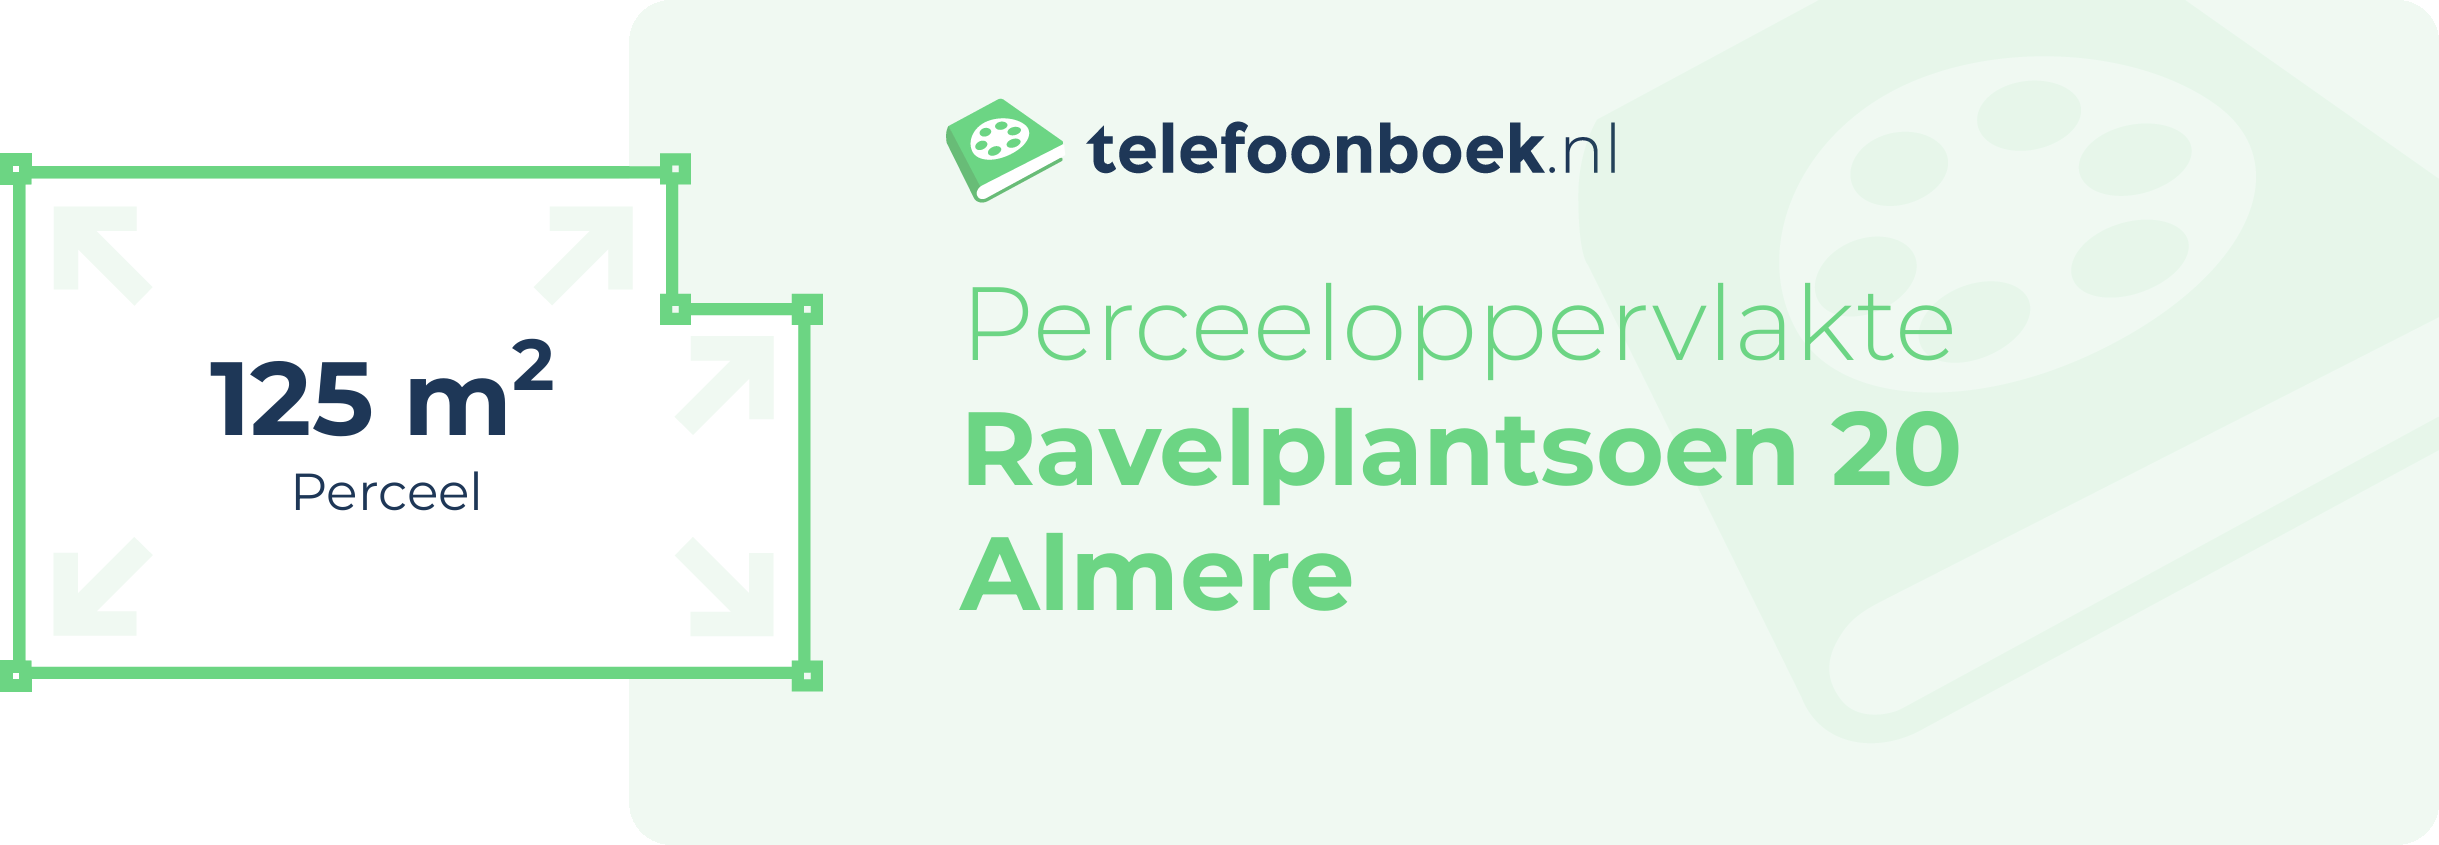 Perceeloppervlakte Ravelplantsoen 20 Almere